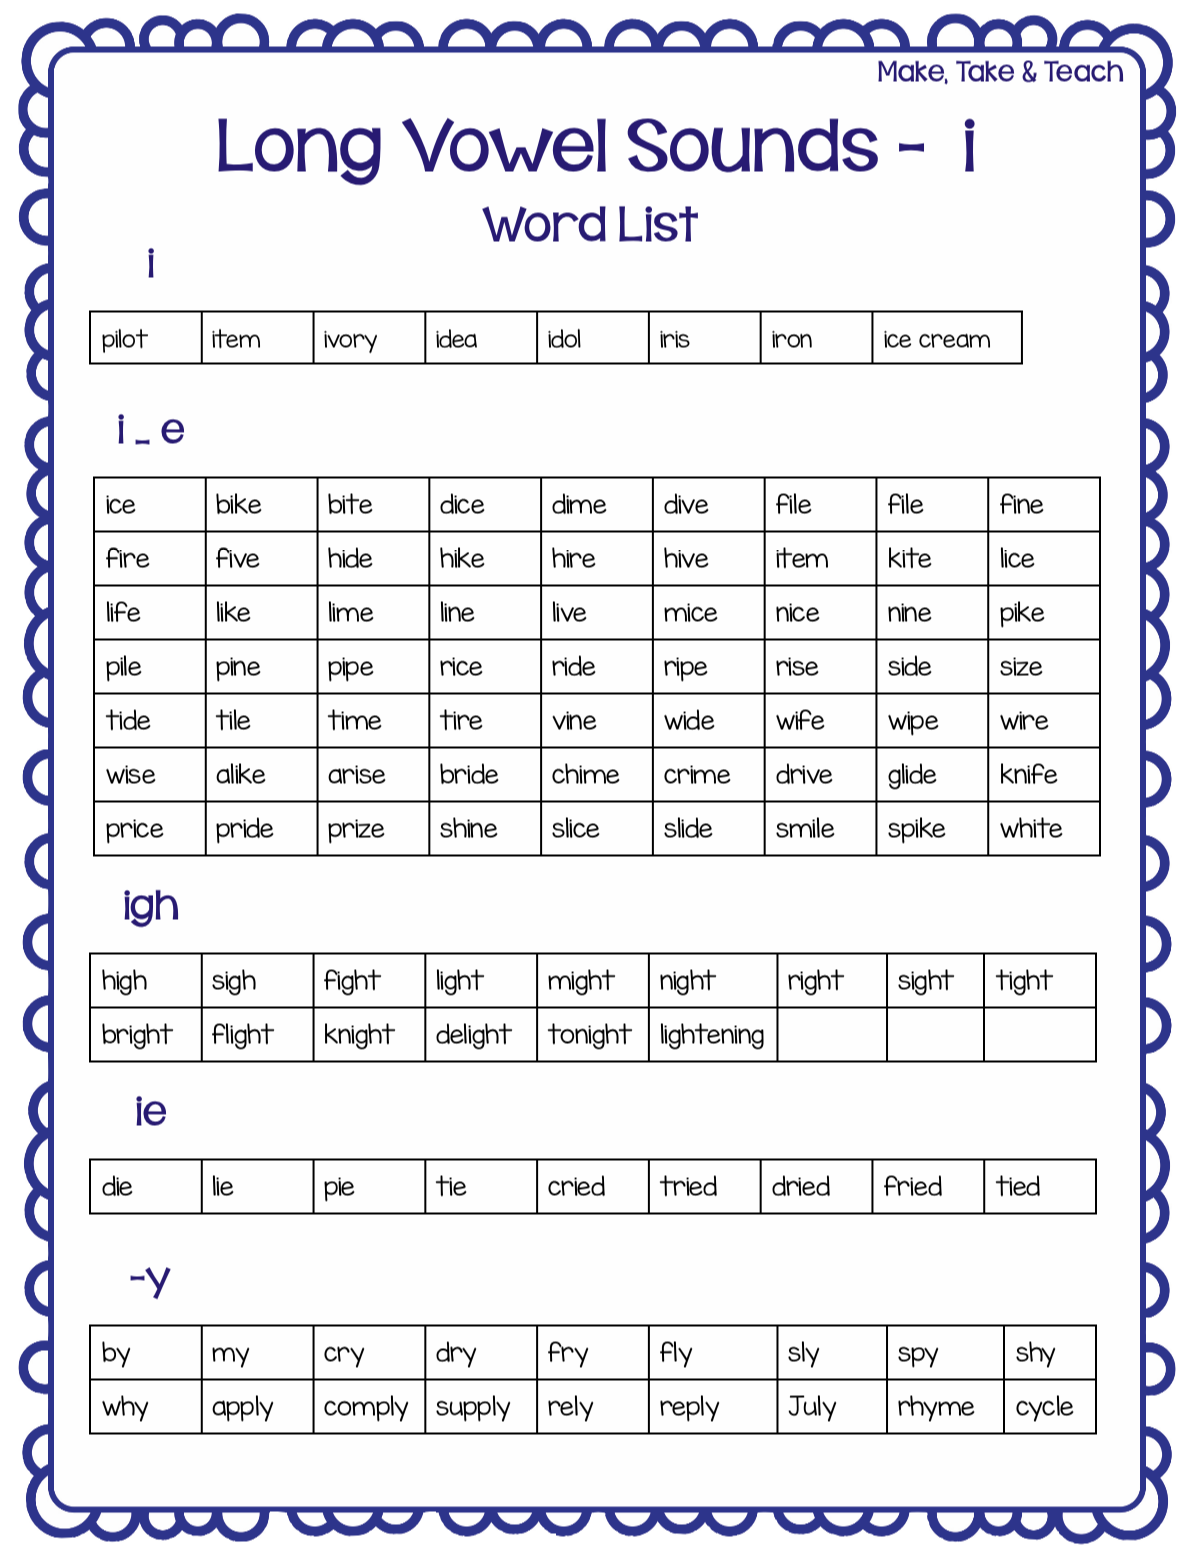 FREE Long Vowel Spelling Word Lists - Make Take & Teach